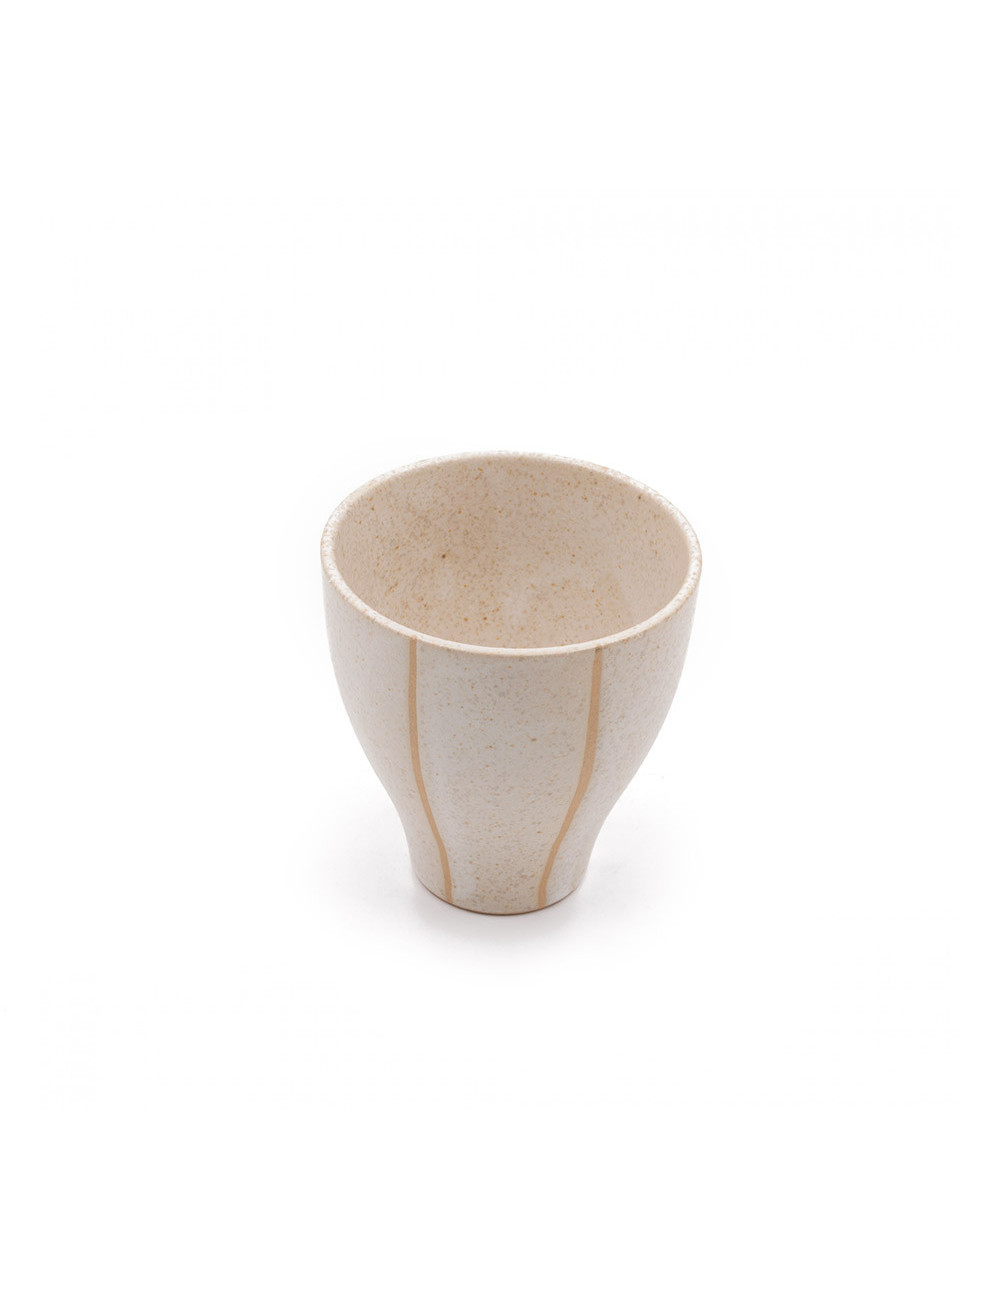 Piccola mug giapponese in ceramica avorio - La Pianta del Tè vendita on line